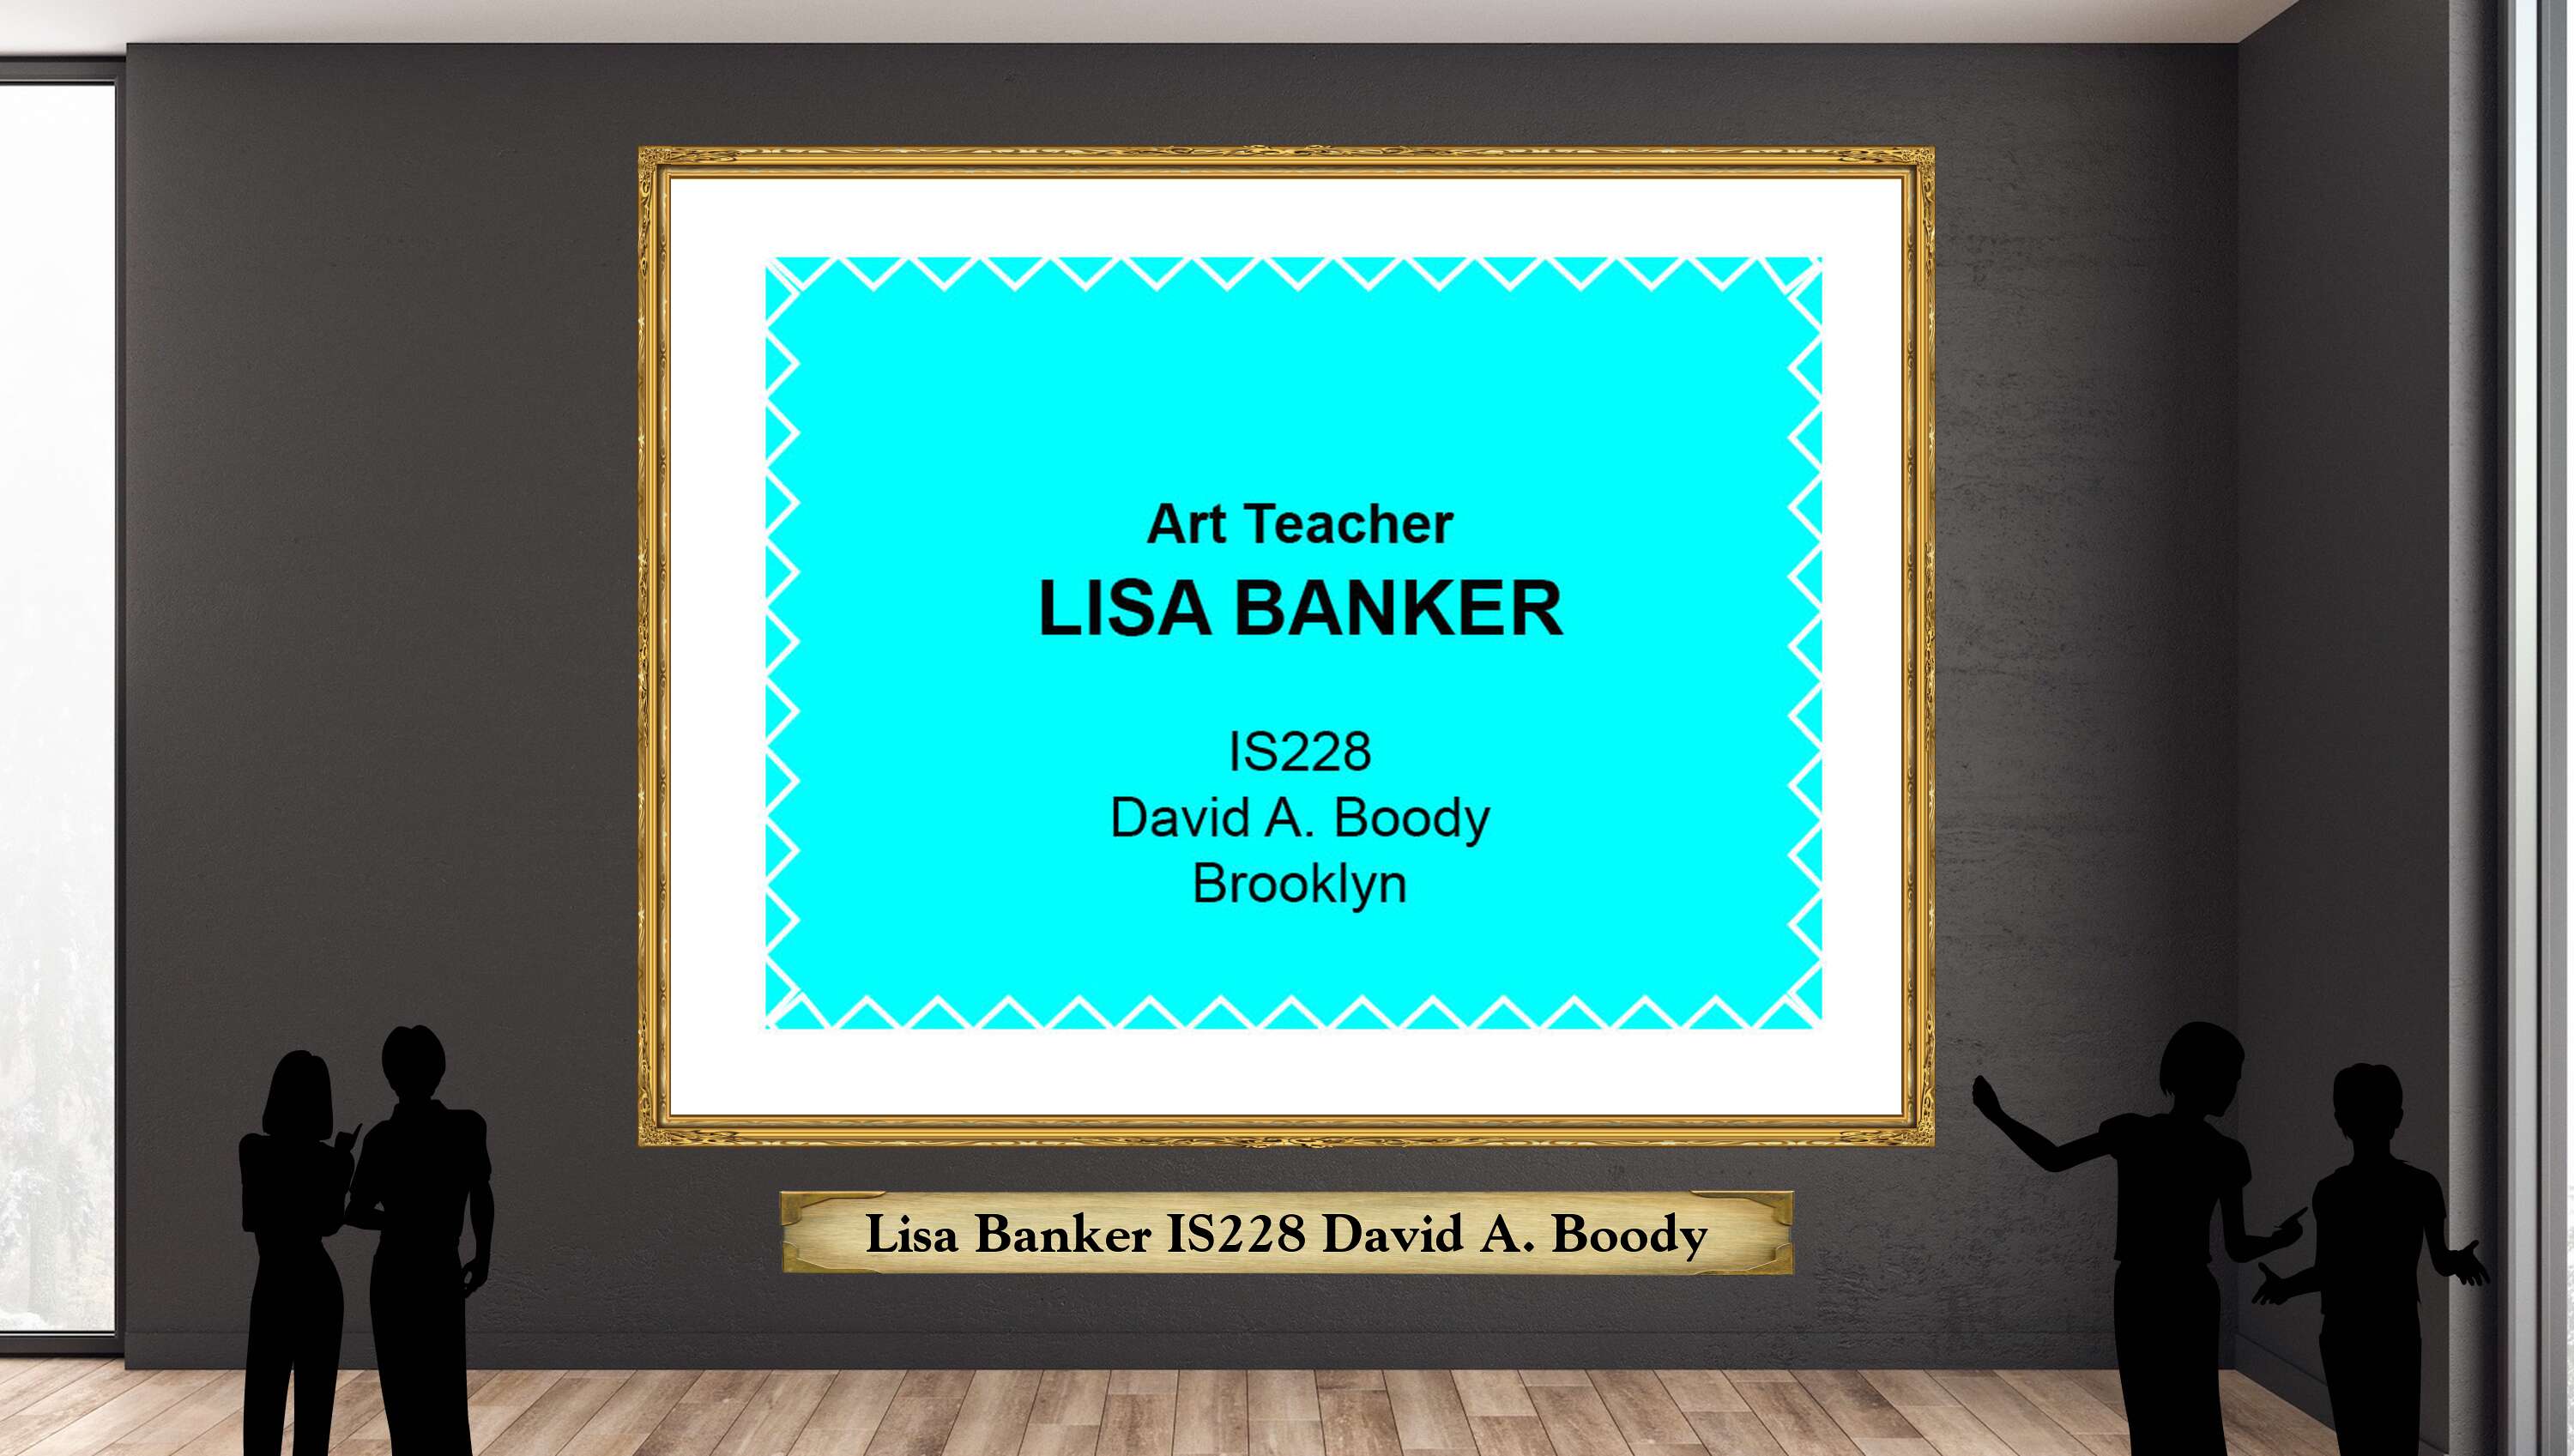 Lisa Banker IS228 David A. Boody